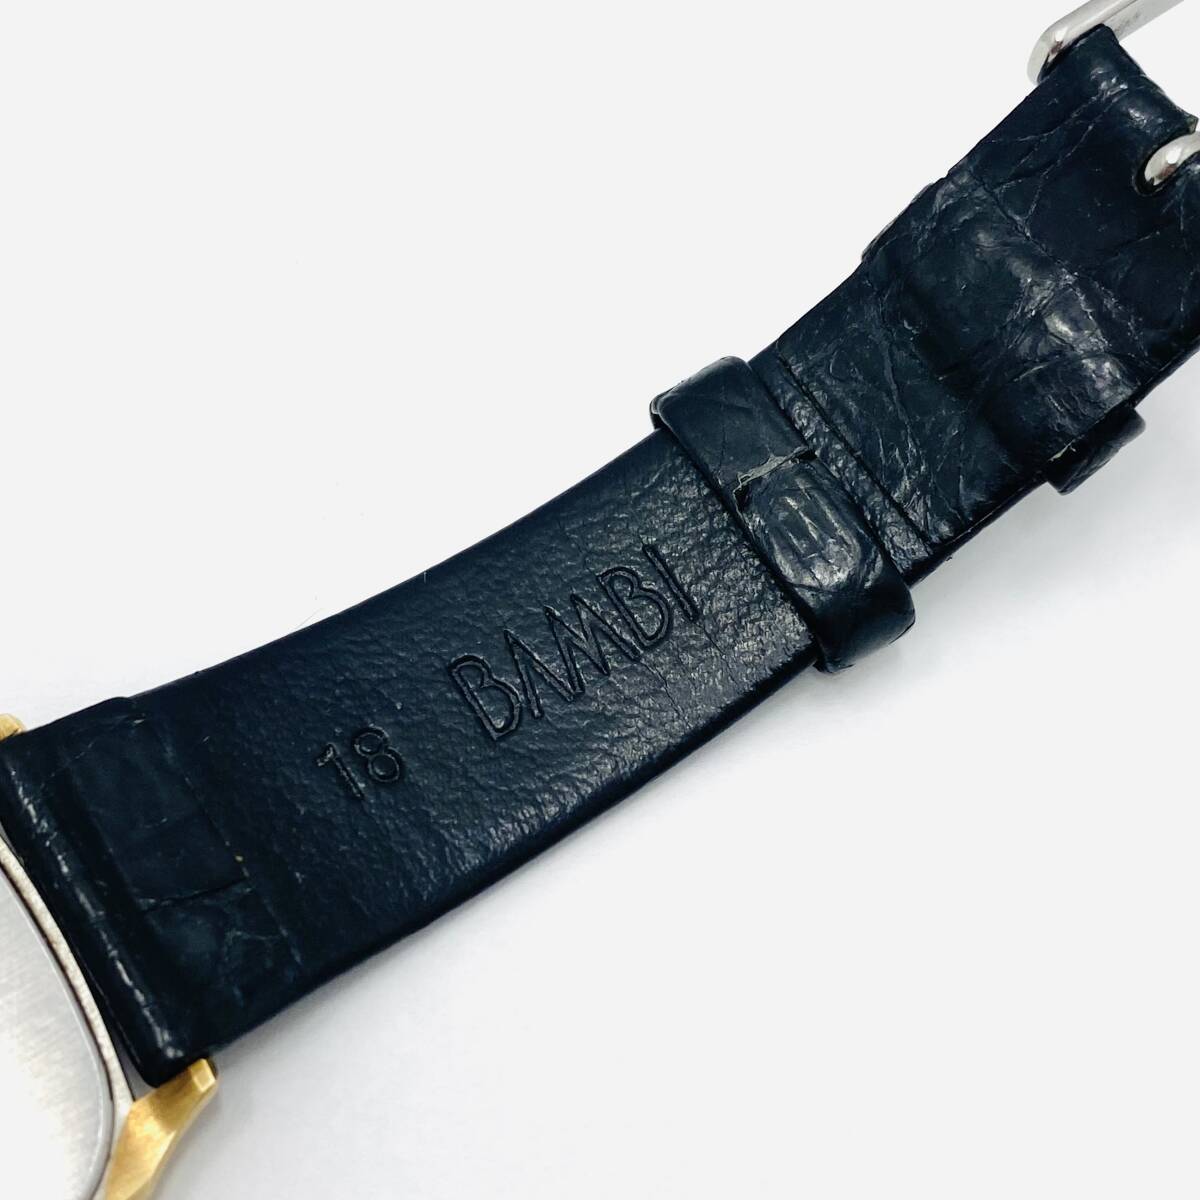 SEIKO セイコー CREDOR クレドール クォーツ腕時計 2F70-5151 YG×SS 14KT刻印 電池交換済み 動作確認済みの画像9